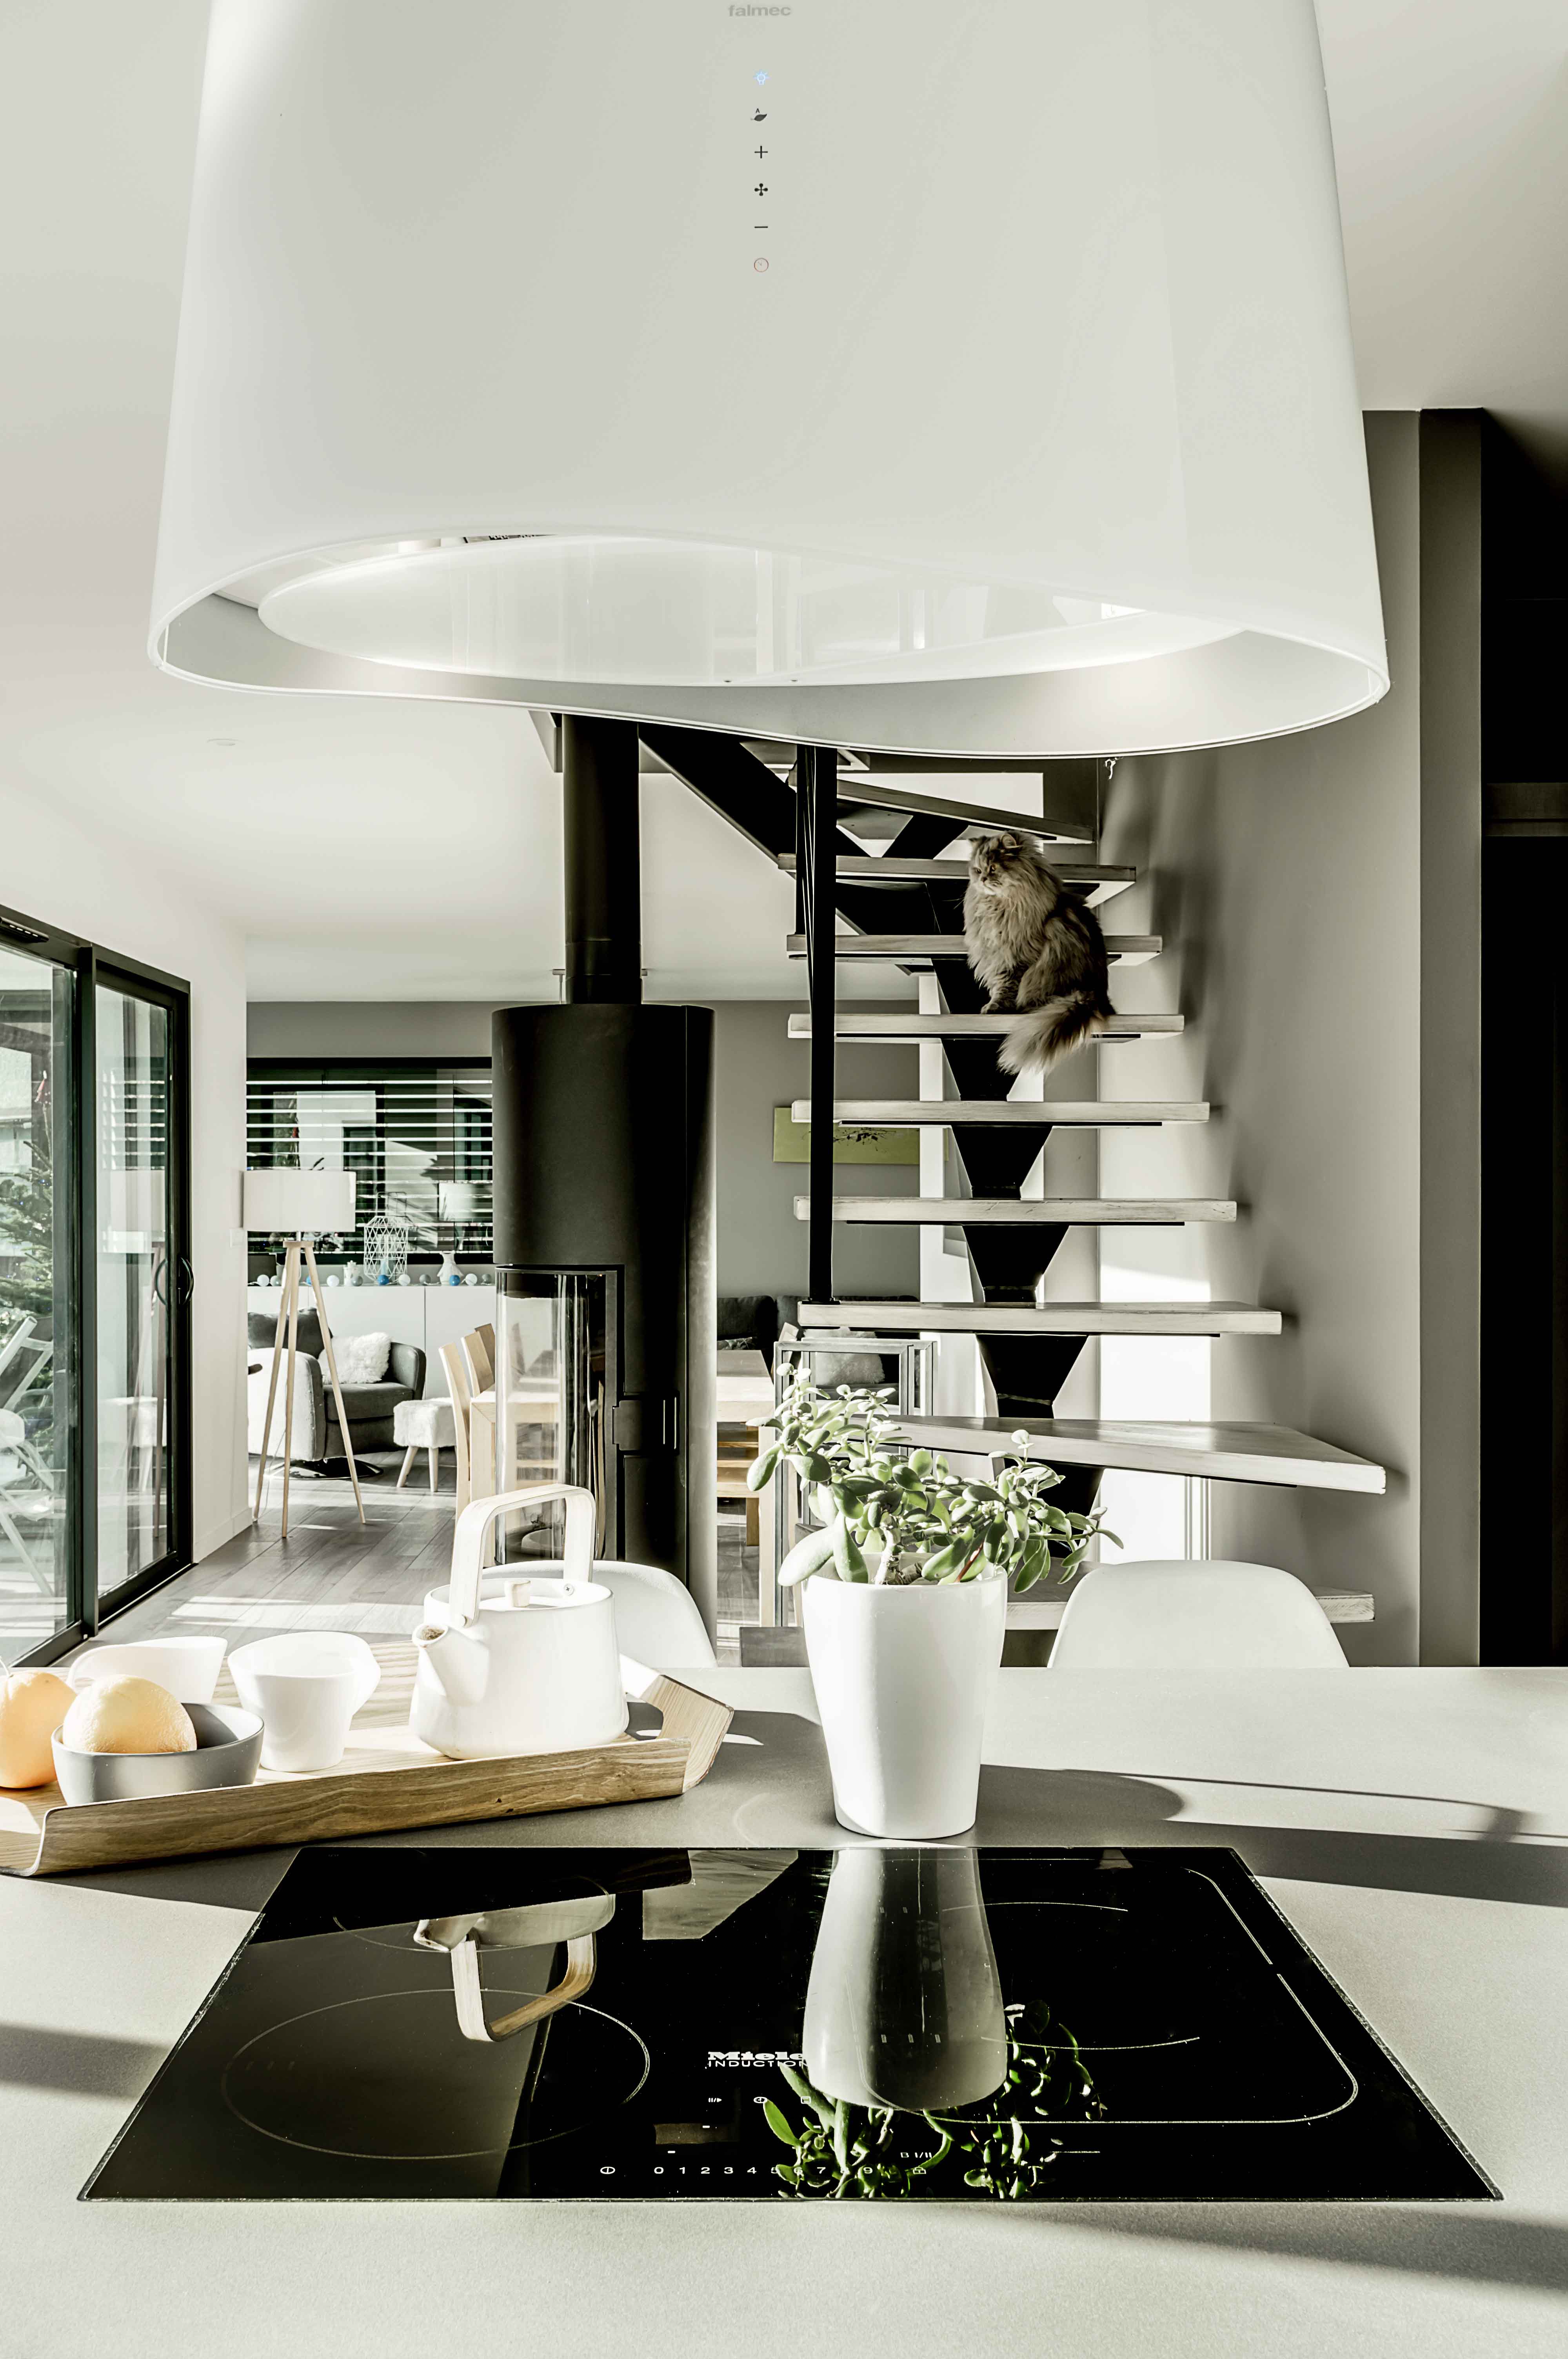 Belle maison ultra chic moderne avec table de cuisson, ultra lumineuse